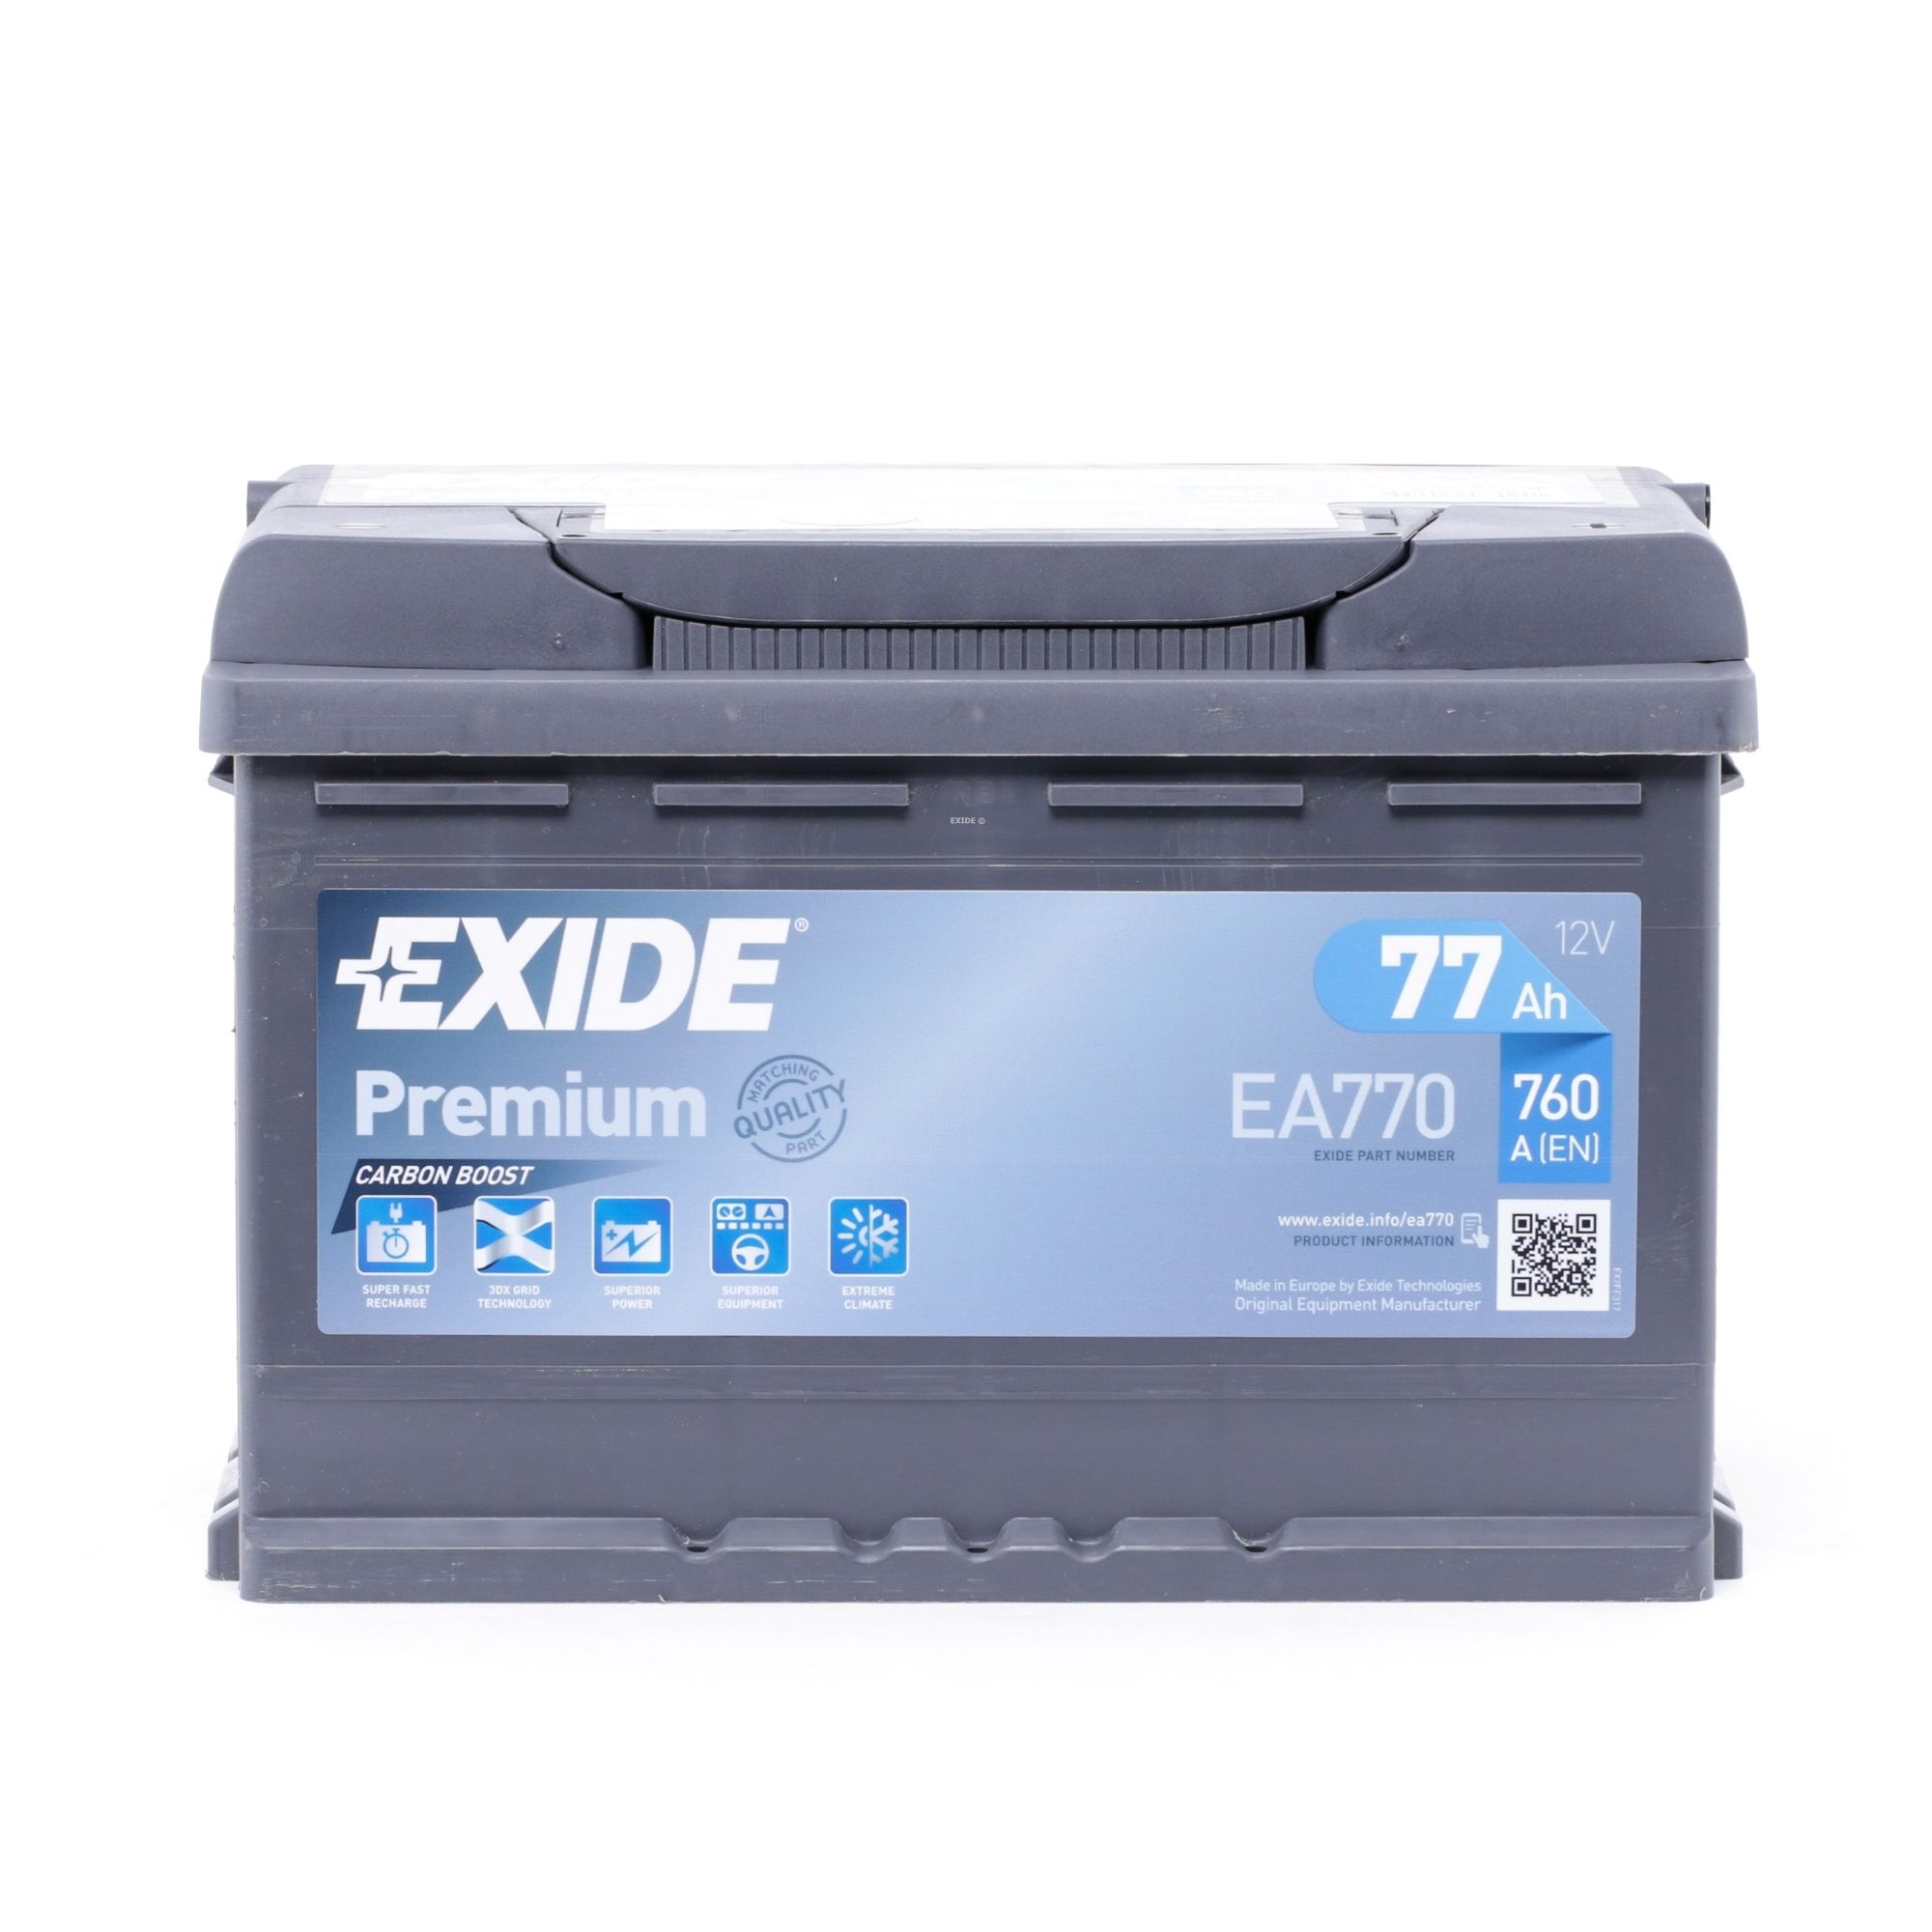 57412 EXIDE PREMIUM 12V 77Ah 760A Bleiakkumulator Kälteprüfstrom EN: 760A, Spannung: 12V Batterie EA770 günstig kaufen